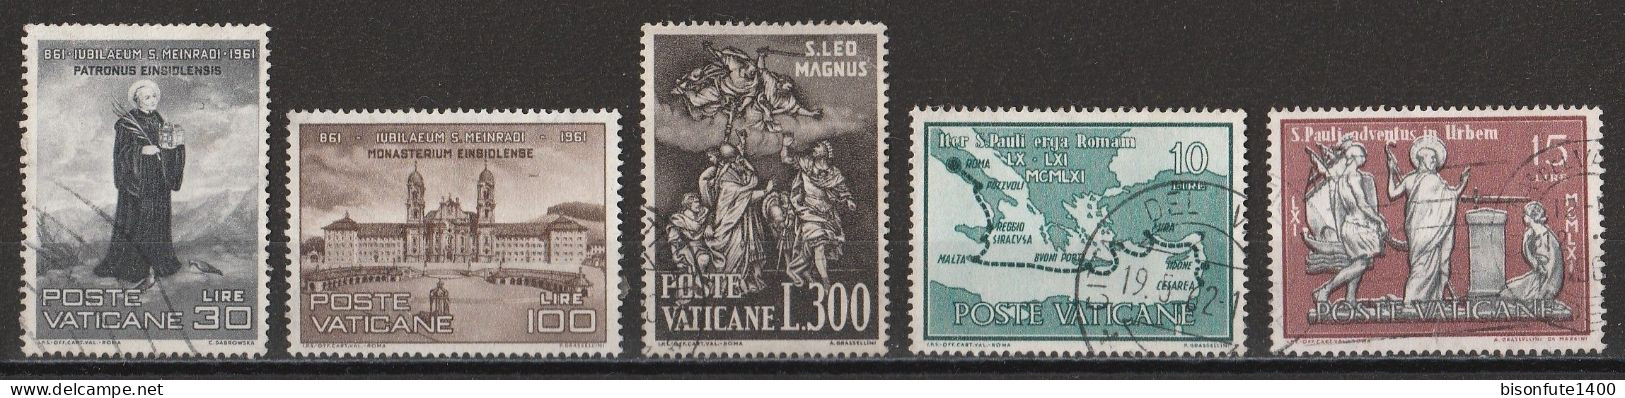 Vatican 1961 : Timbres Yvert & Tellier N° 316 - 317 - 321 - 322 - 323 - 329 - 331 - 332 - 336 Et 343 Oblitérés. - Used Stamps